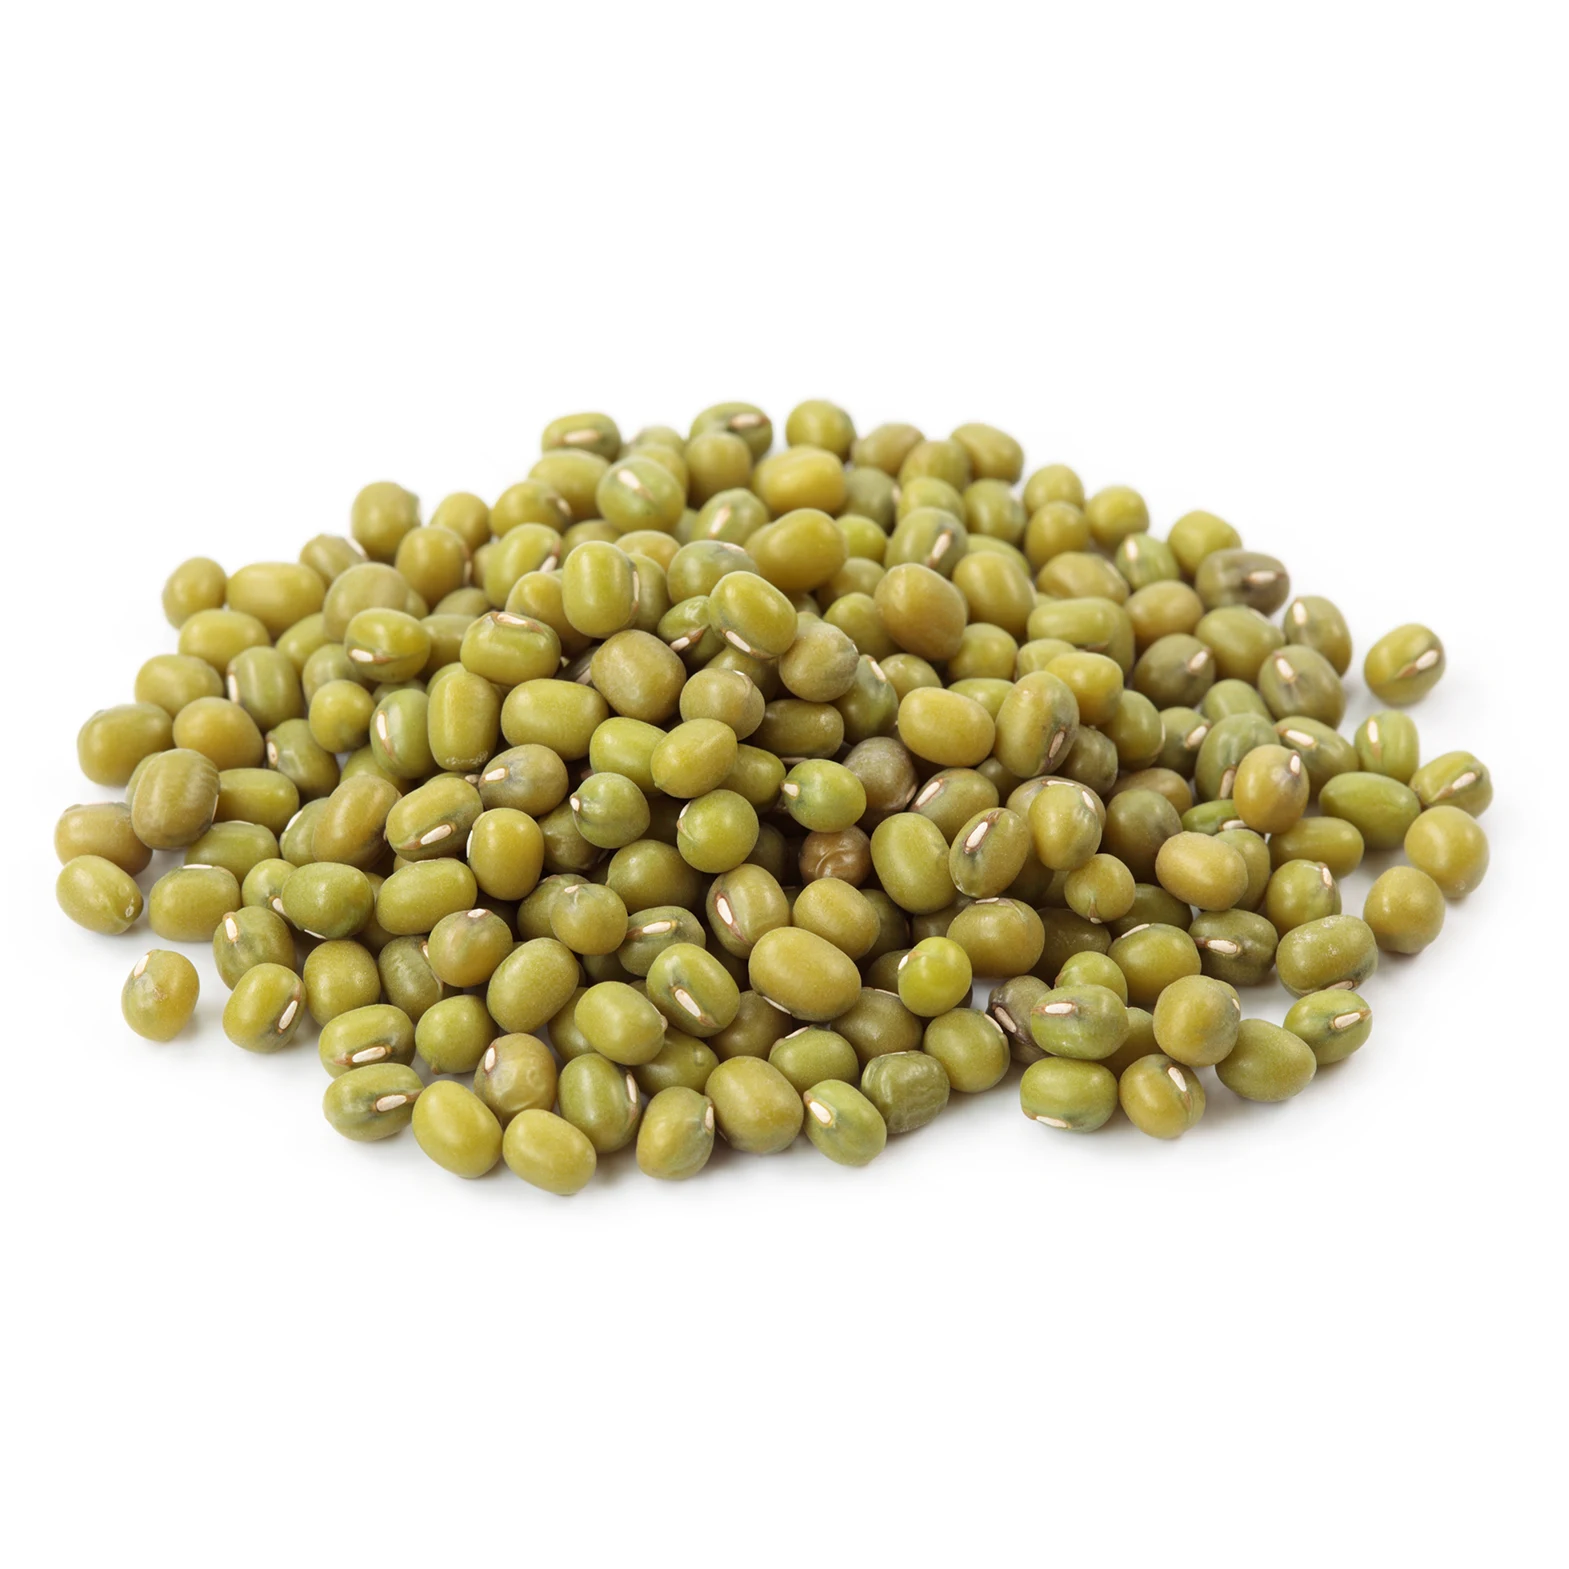 Wholesale Premium Organic Dried Green Mung Beans Quality Green Mung Beans